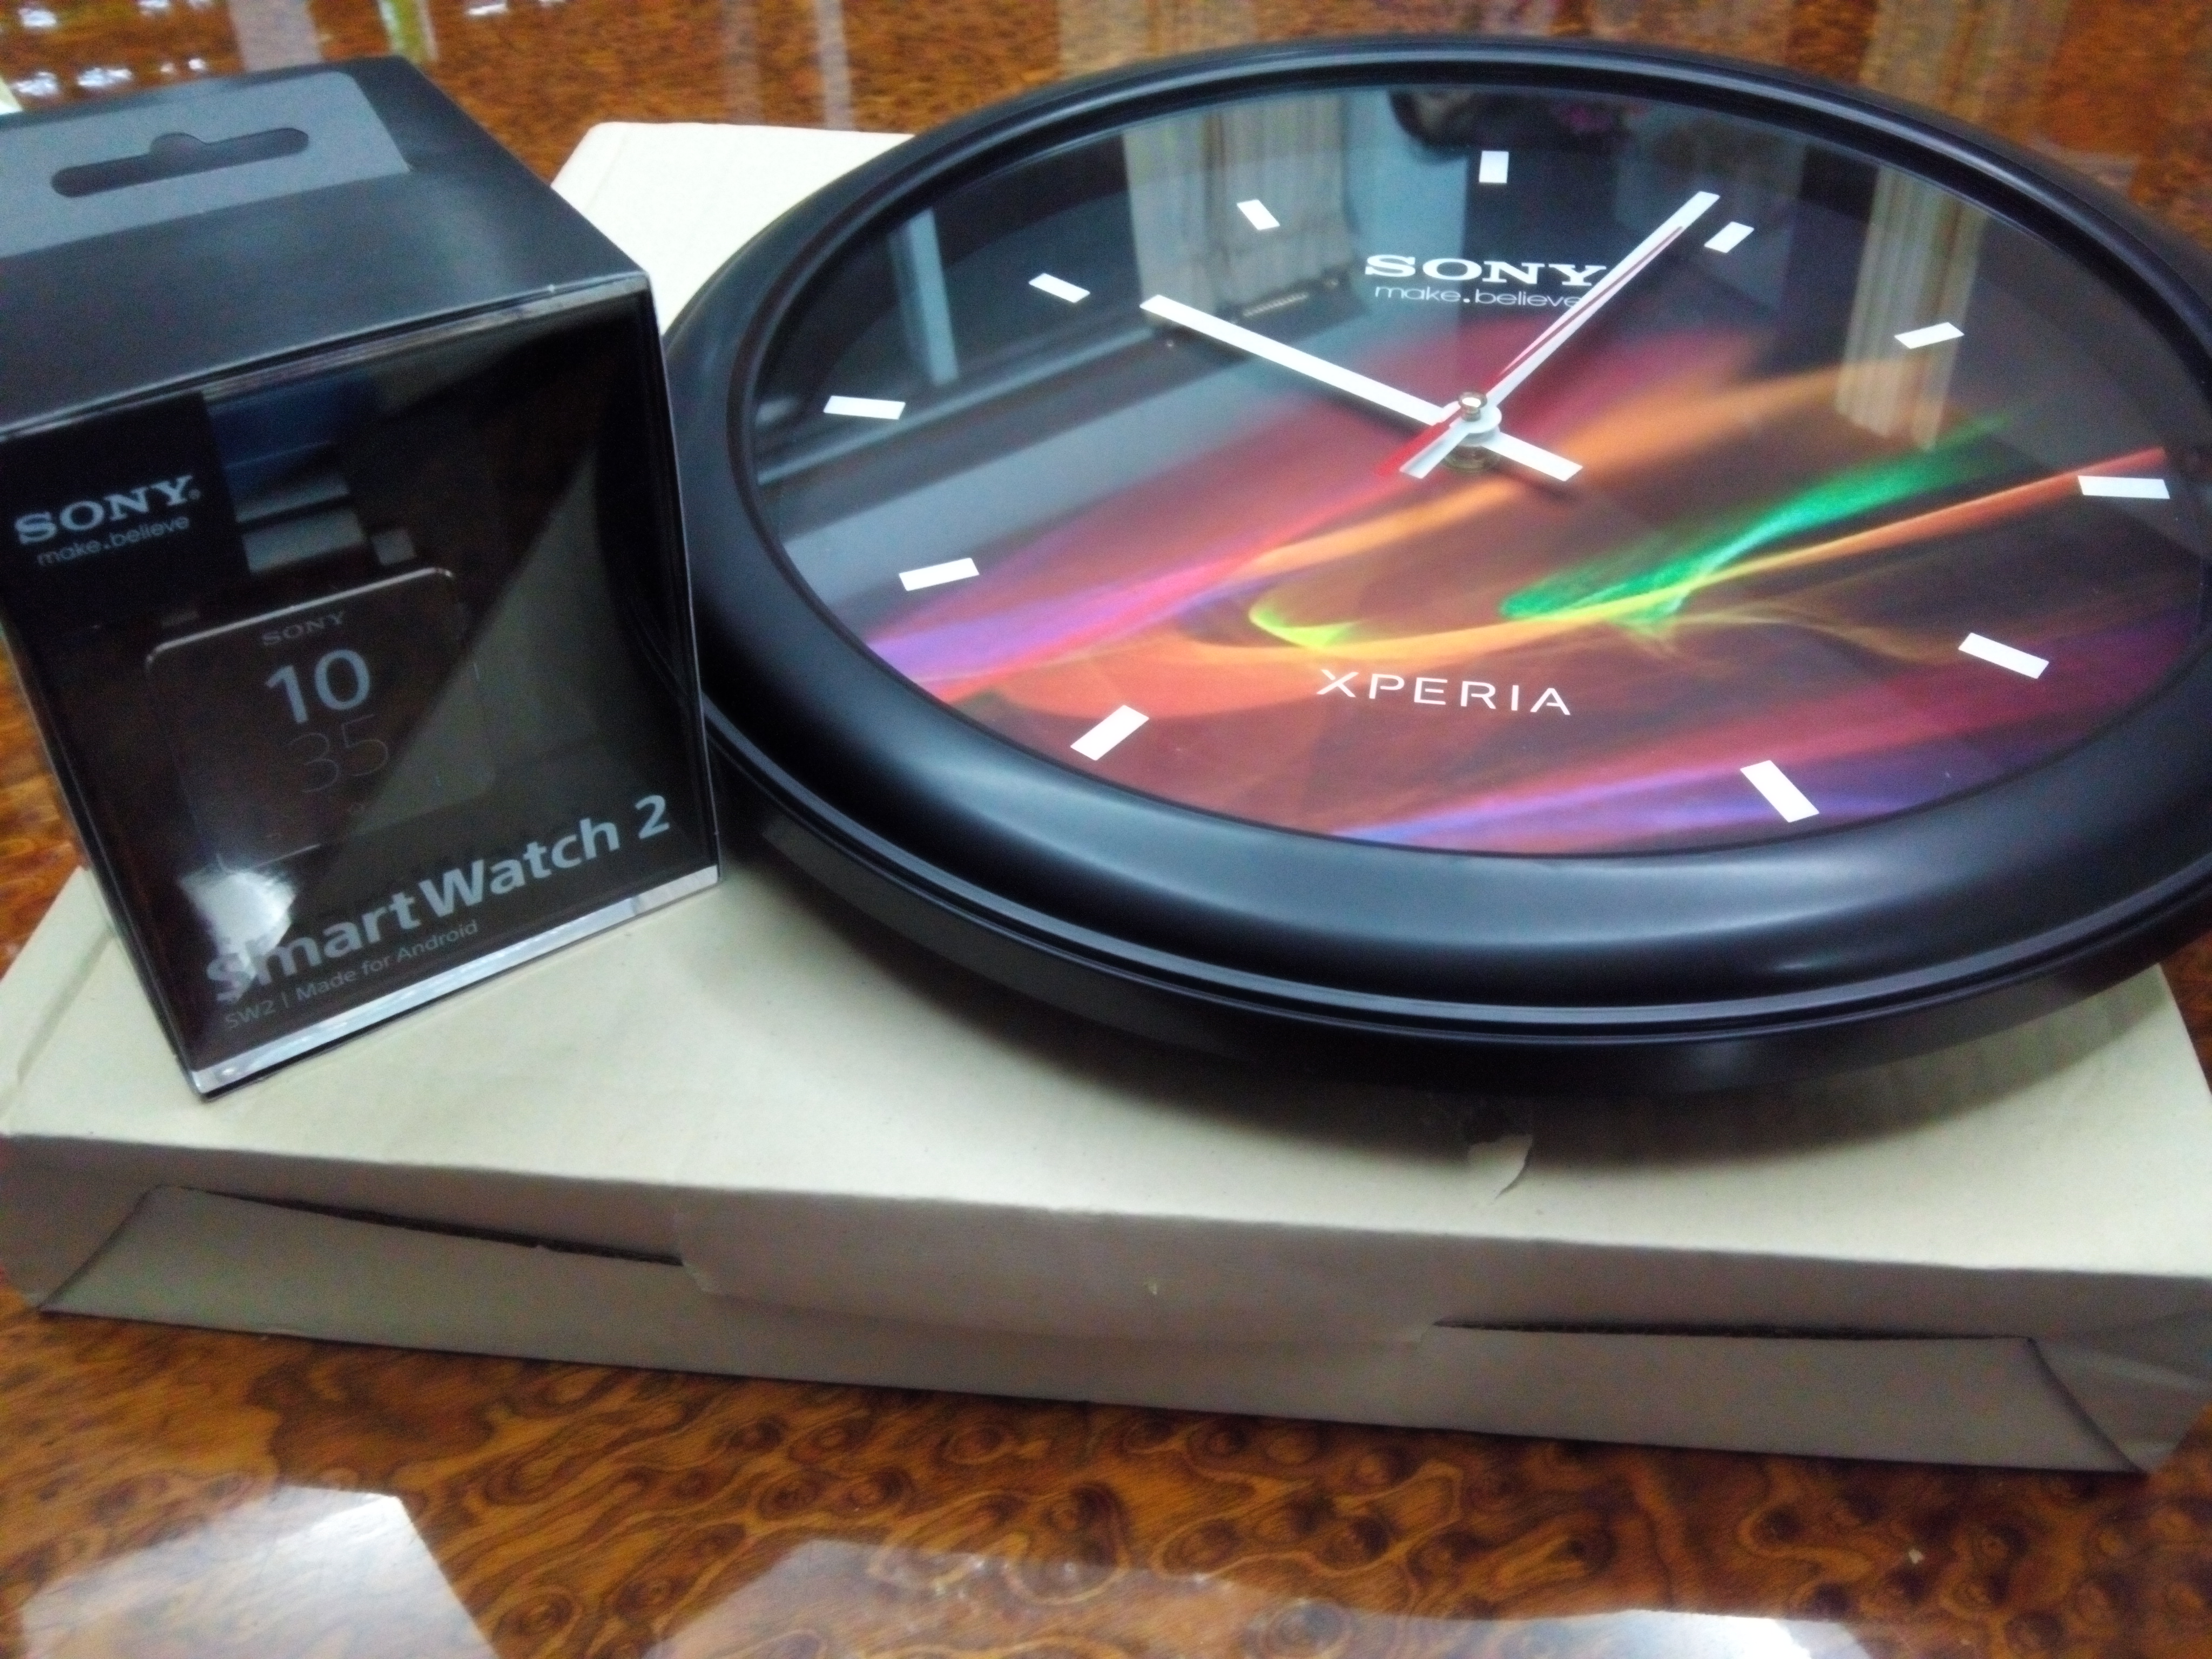 IMG 20131026 070020 | TME 2013 | <!--:TH--></noscript>[Unboxing + พรีวิว] แกะกล่อง Sony Smartwatch 2 และ ชมรอบตัวเครื่อง